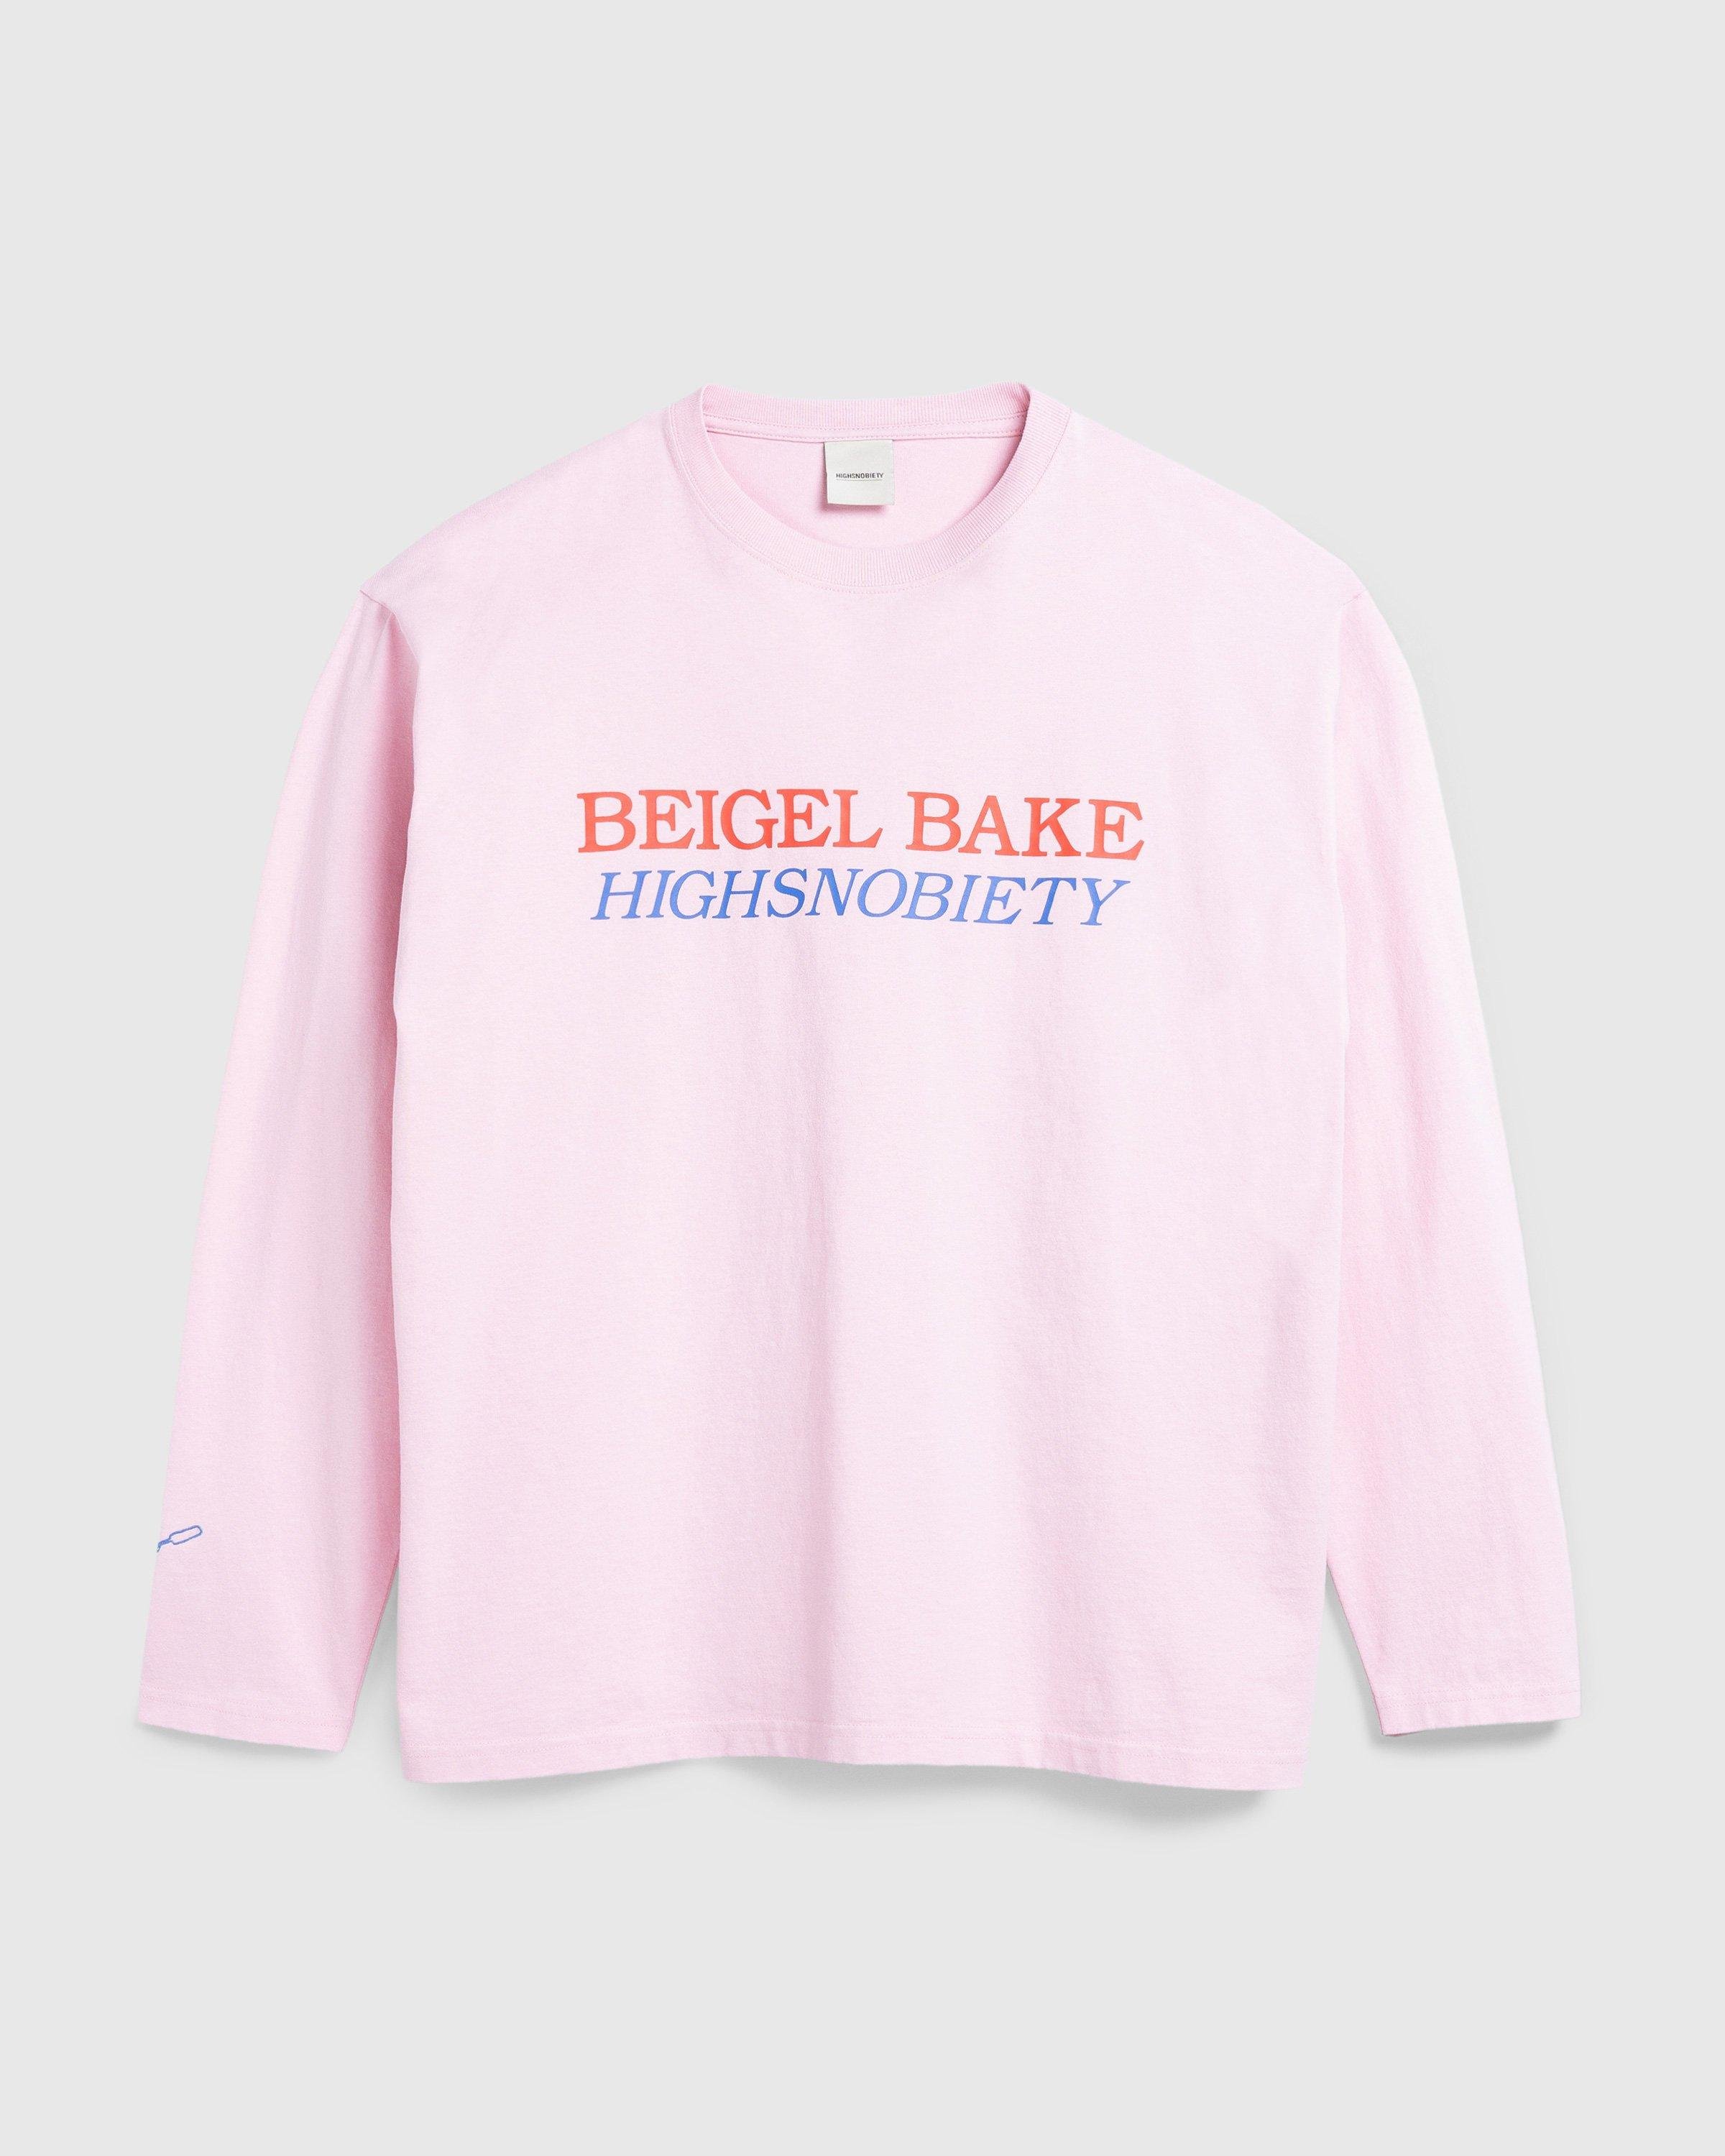 Beigel Bake x HighsnobietyLong-Sleeve Logo Tee Pink by HIGHSNOBIETY